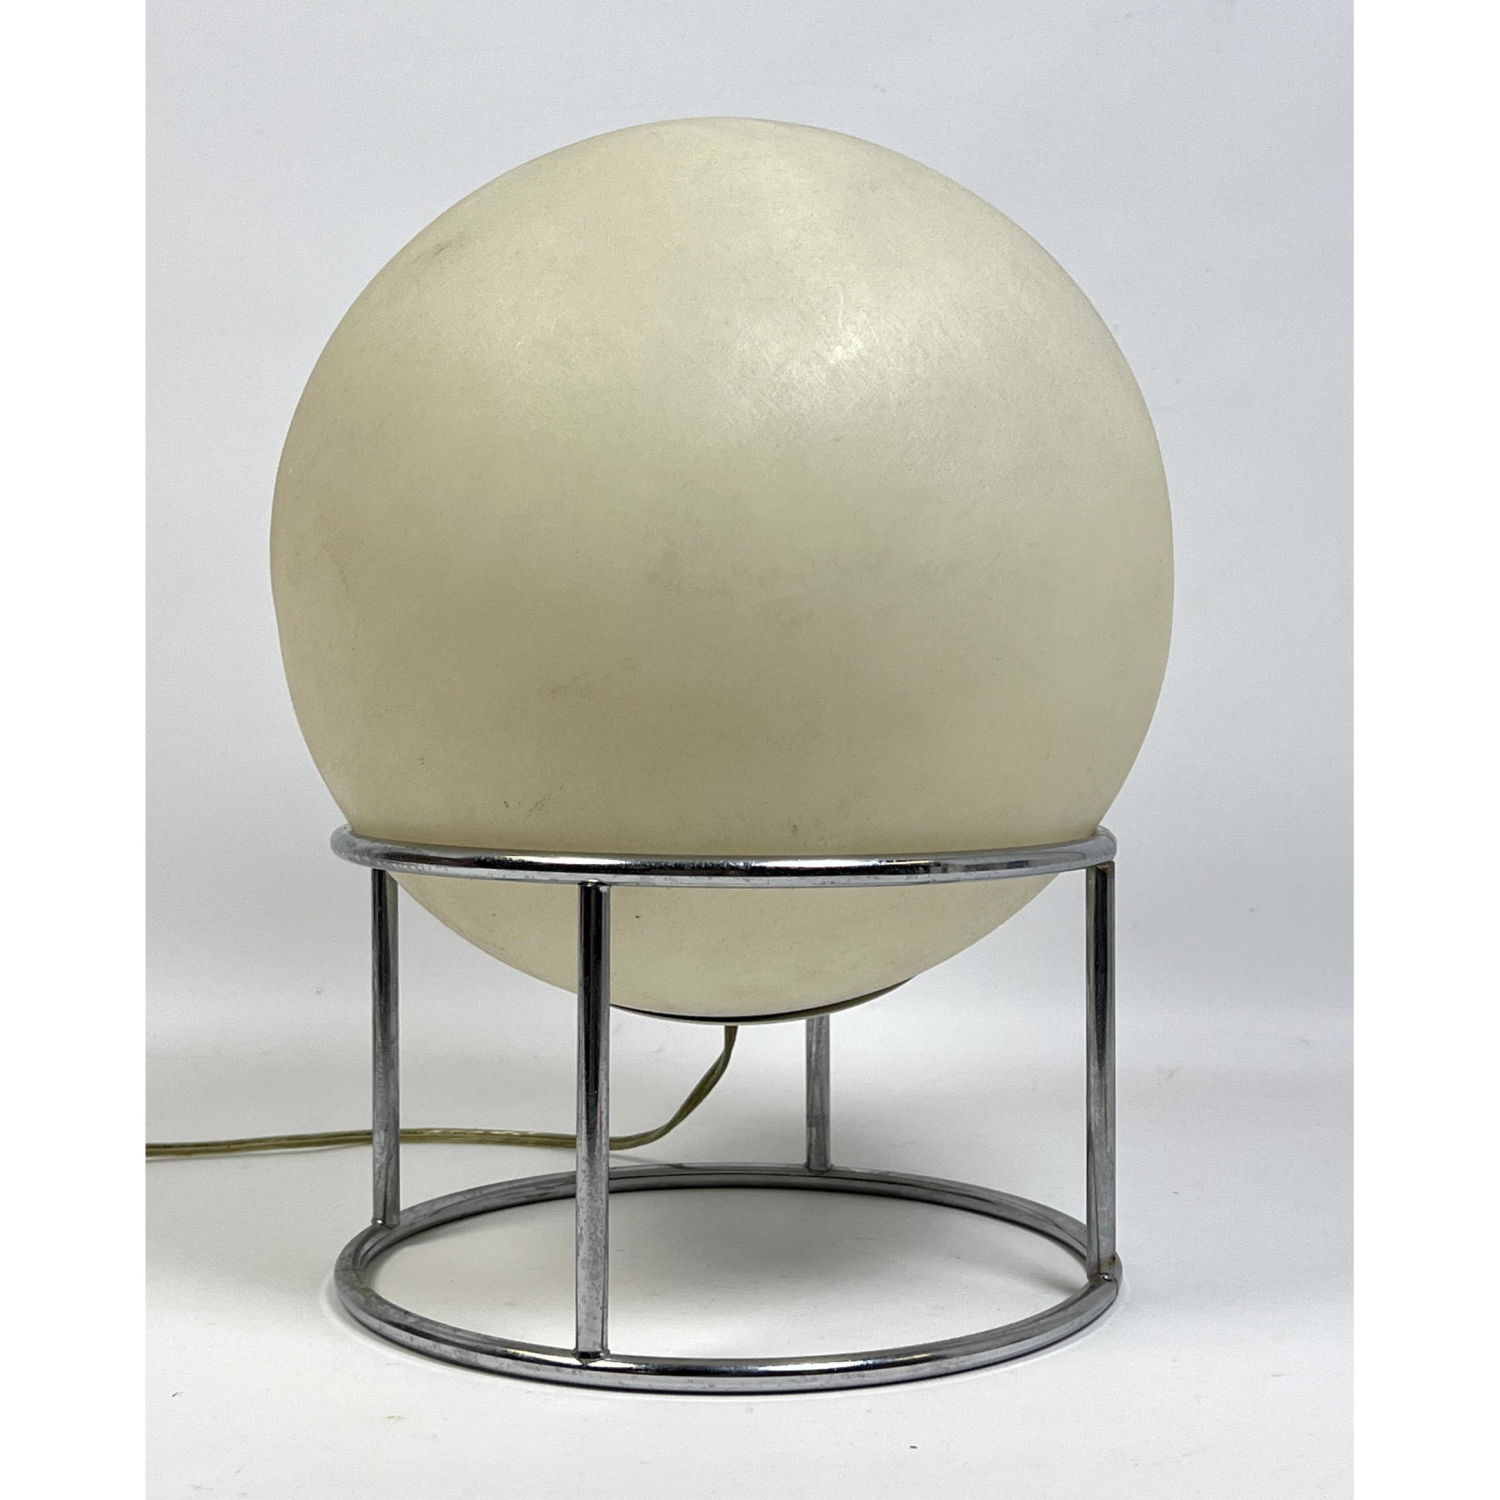 Modernist Ball Shade Lamp. Chrome